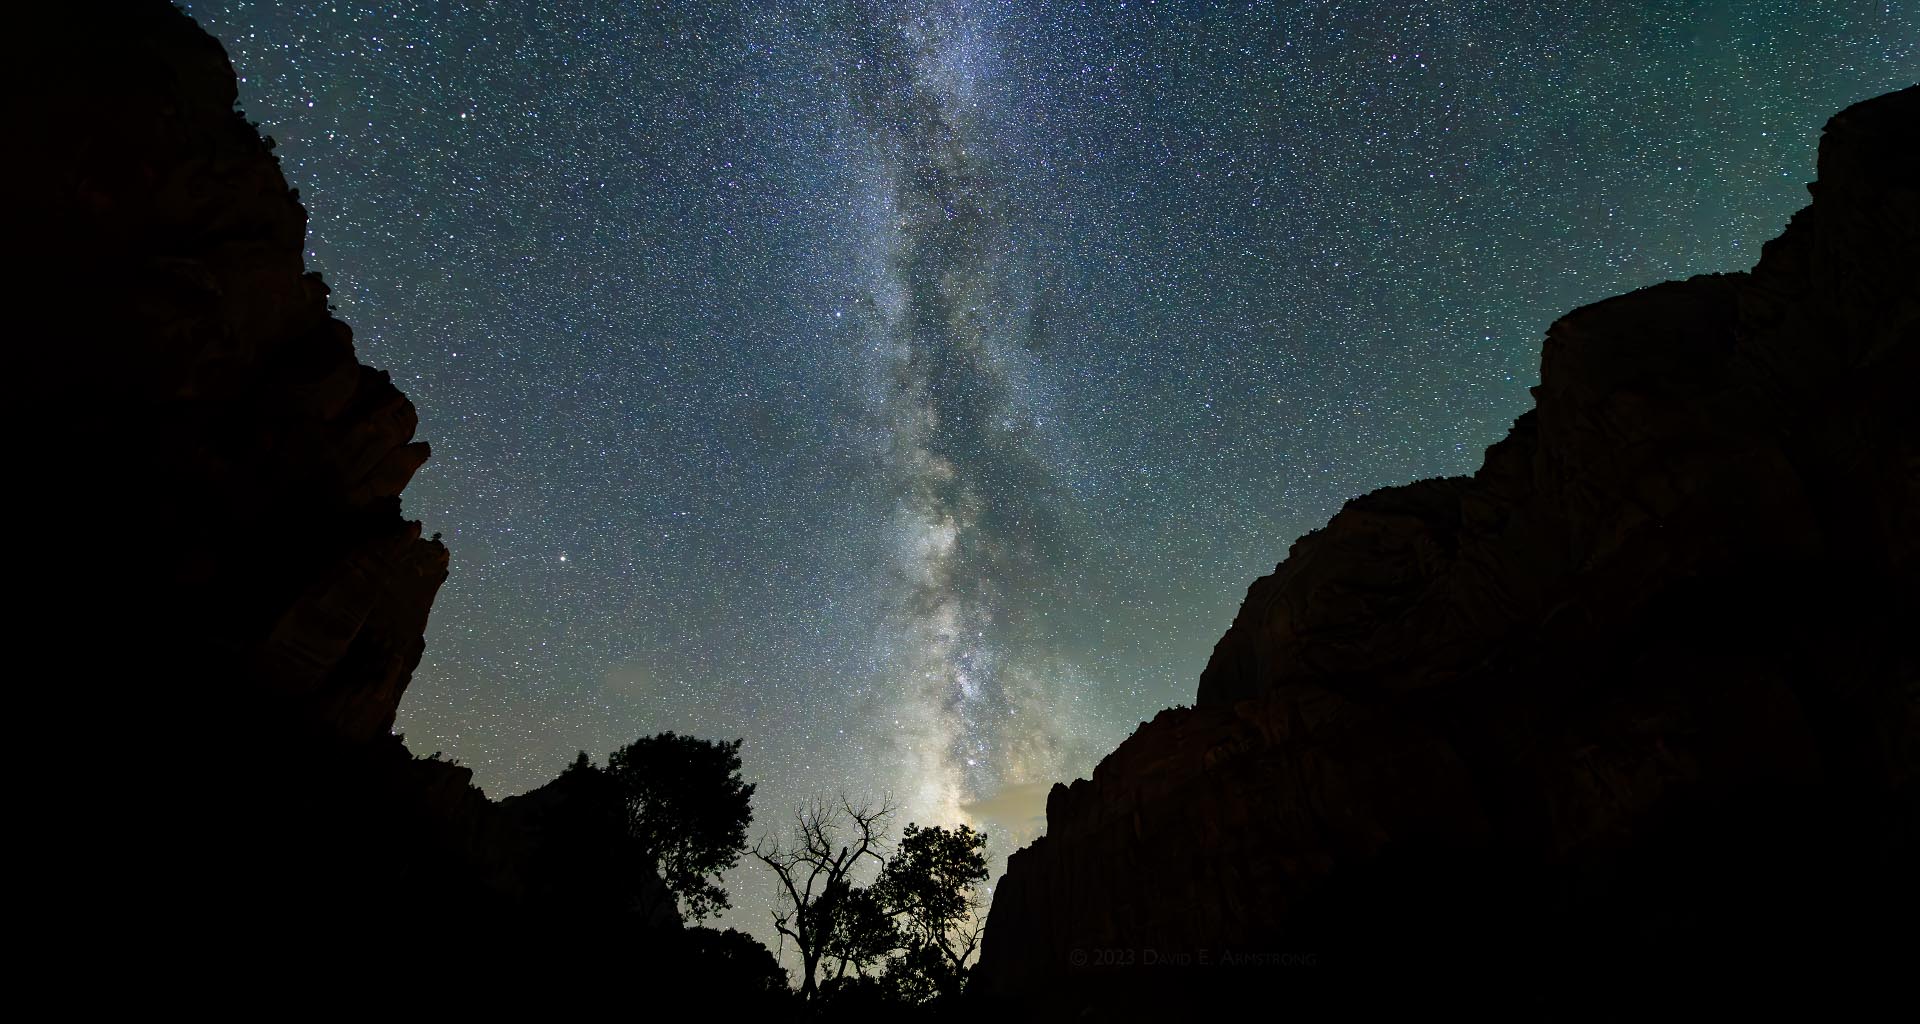 Astro.Milky Way.Valley.no star.1f.1920.DavidEArmstrong_D850_20210806_063456_850-Enhanced-NR-1.jpg